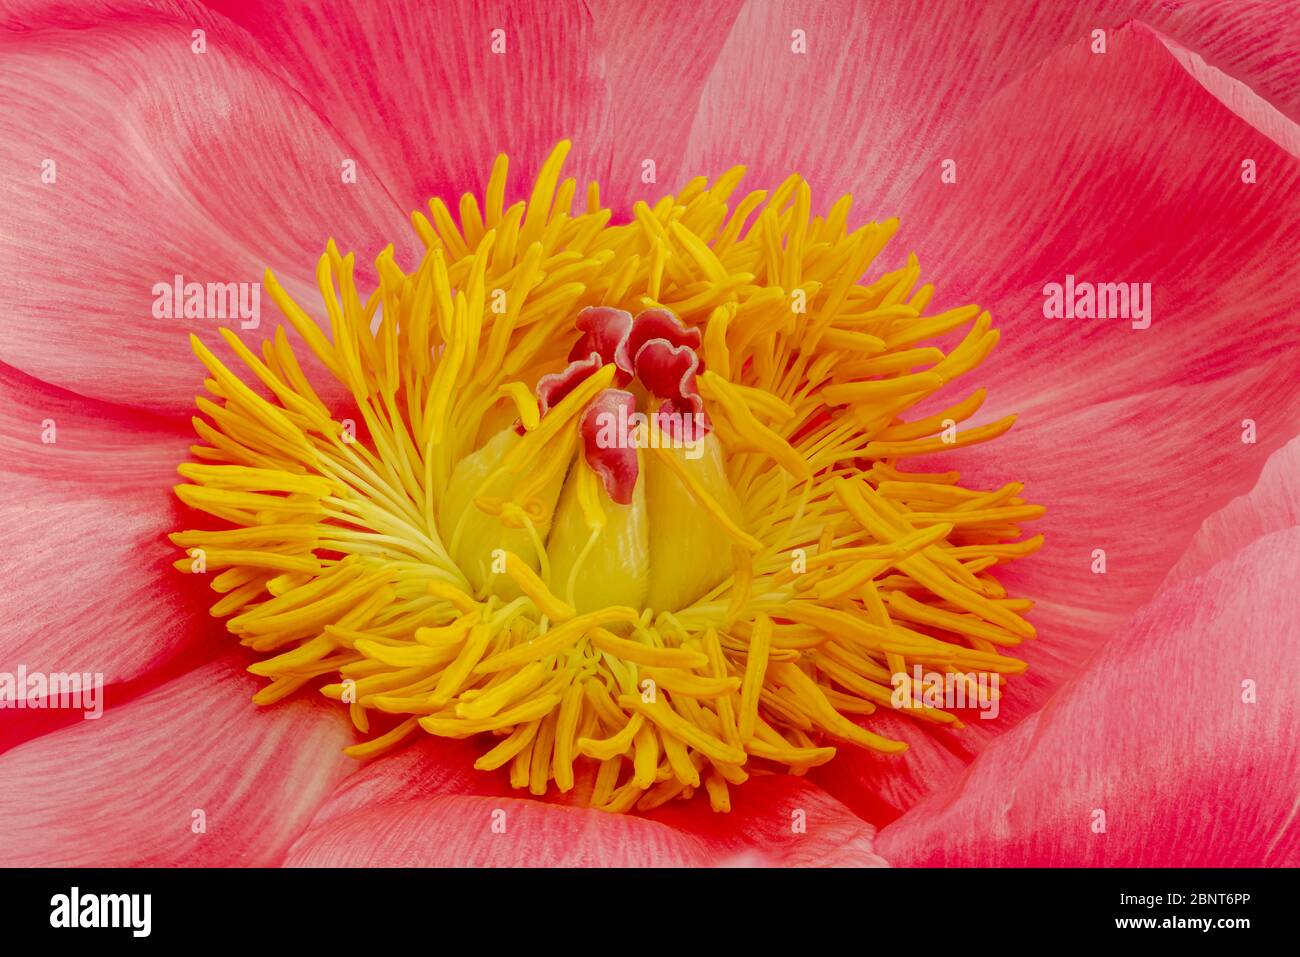 bright glossy pink peony blossom fine art still life color macro,single isolated bloom,filigree detailed texture Stock Photo